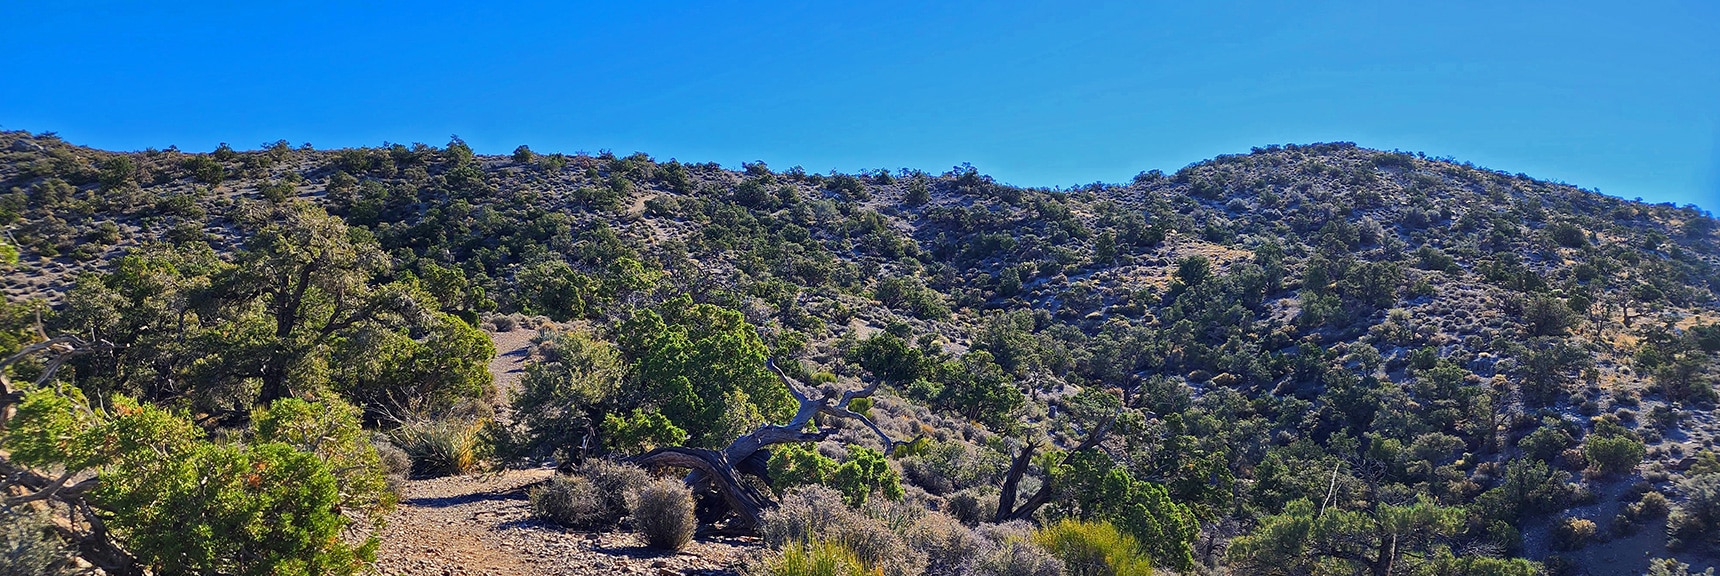 Approaching Upper Crest Ridgeline, Straight Ahead. | Hollow Rock Peak | Rainbow Mountain Wilderness, Nevada